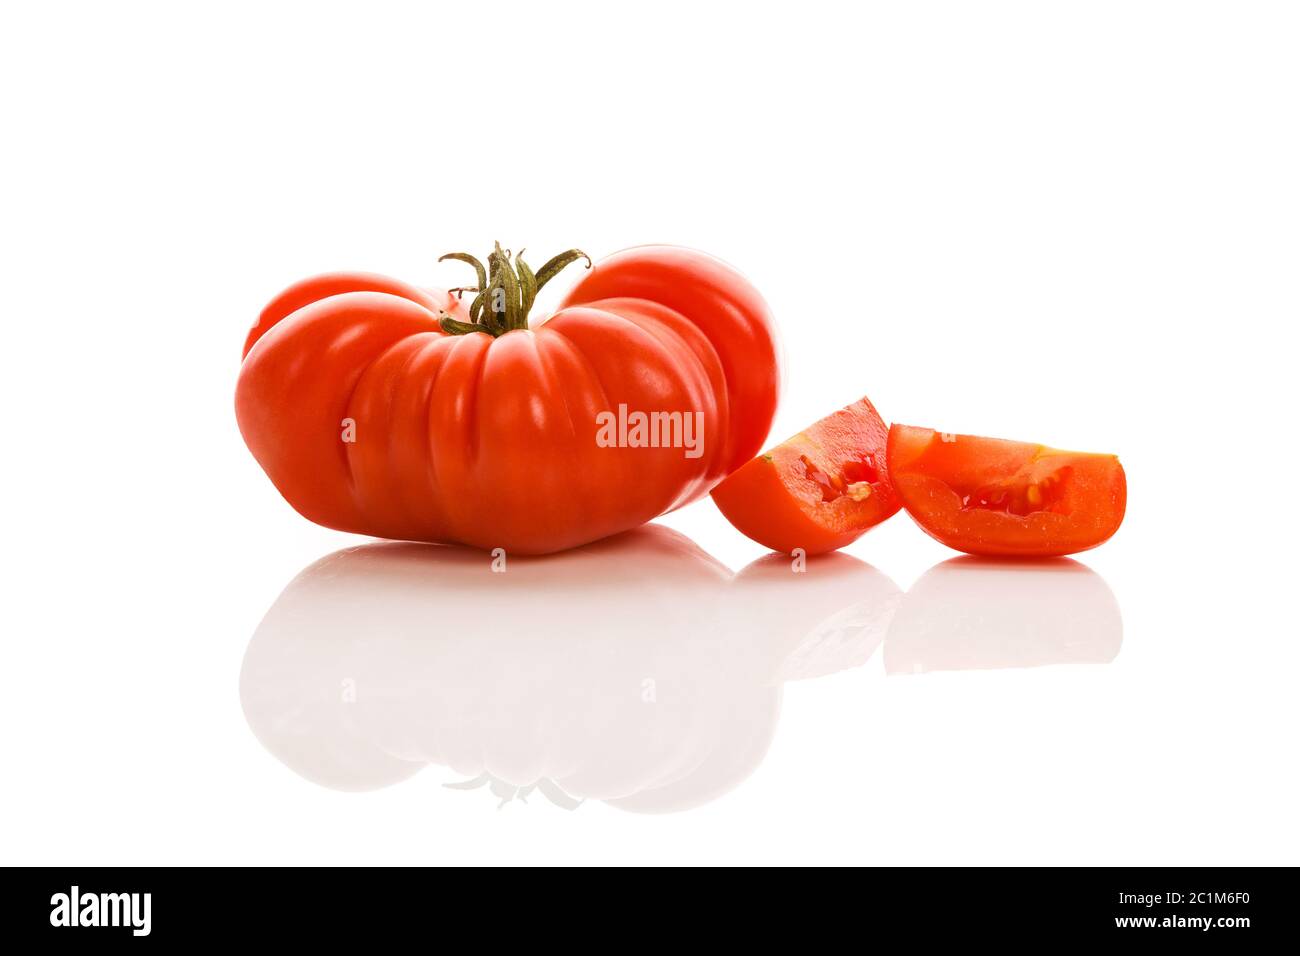 Whole tomato on white background. Stock Photo